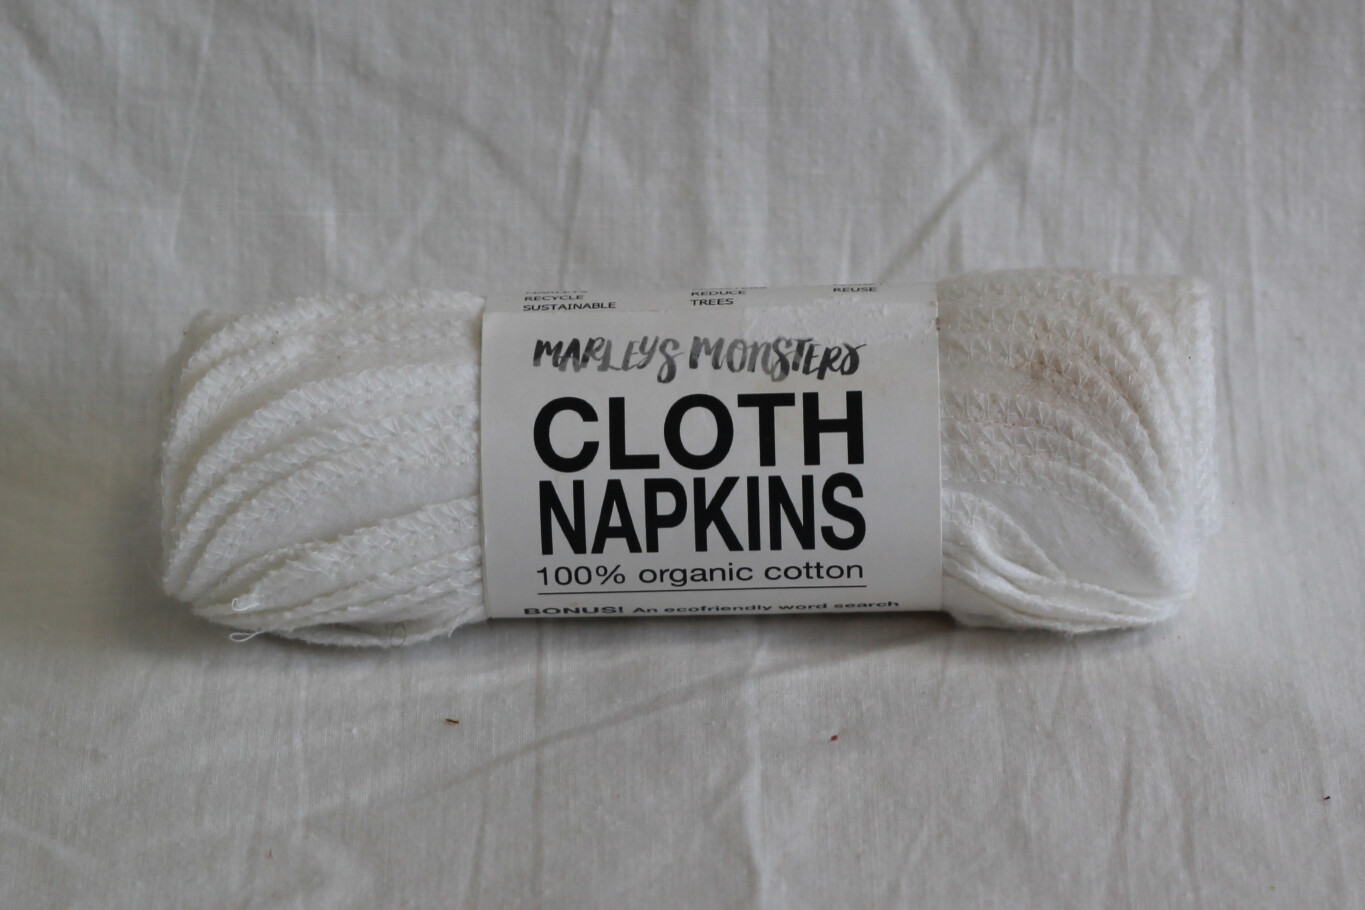 Marleys Monsters Cloth Napkins